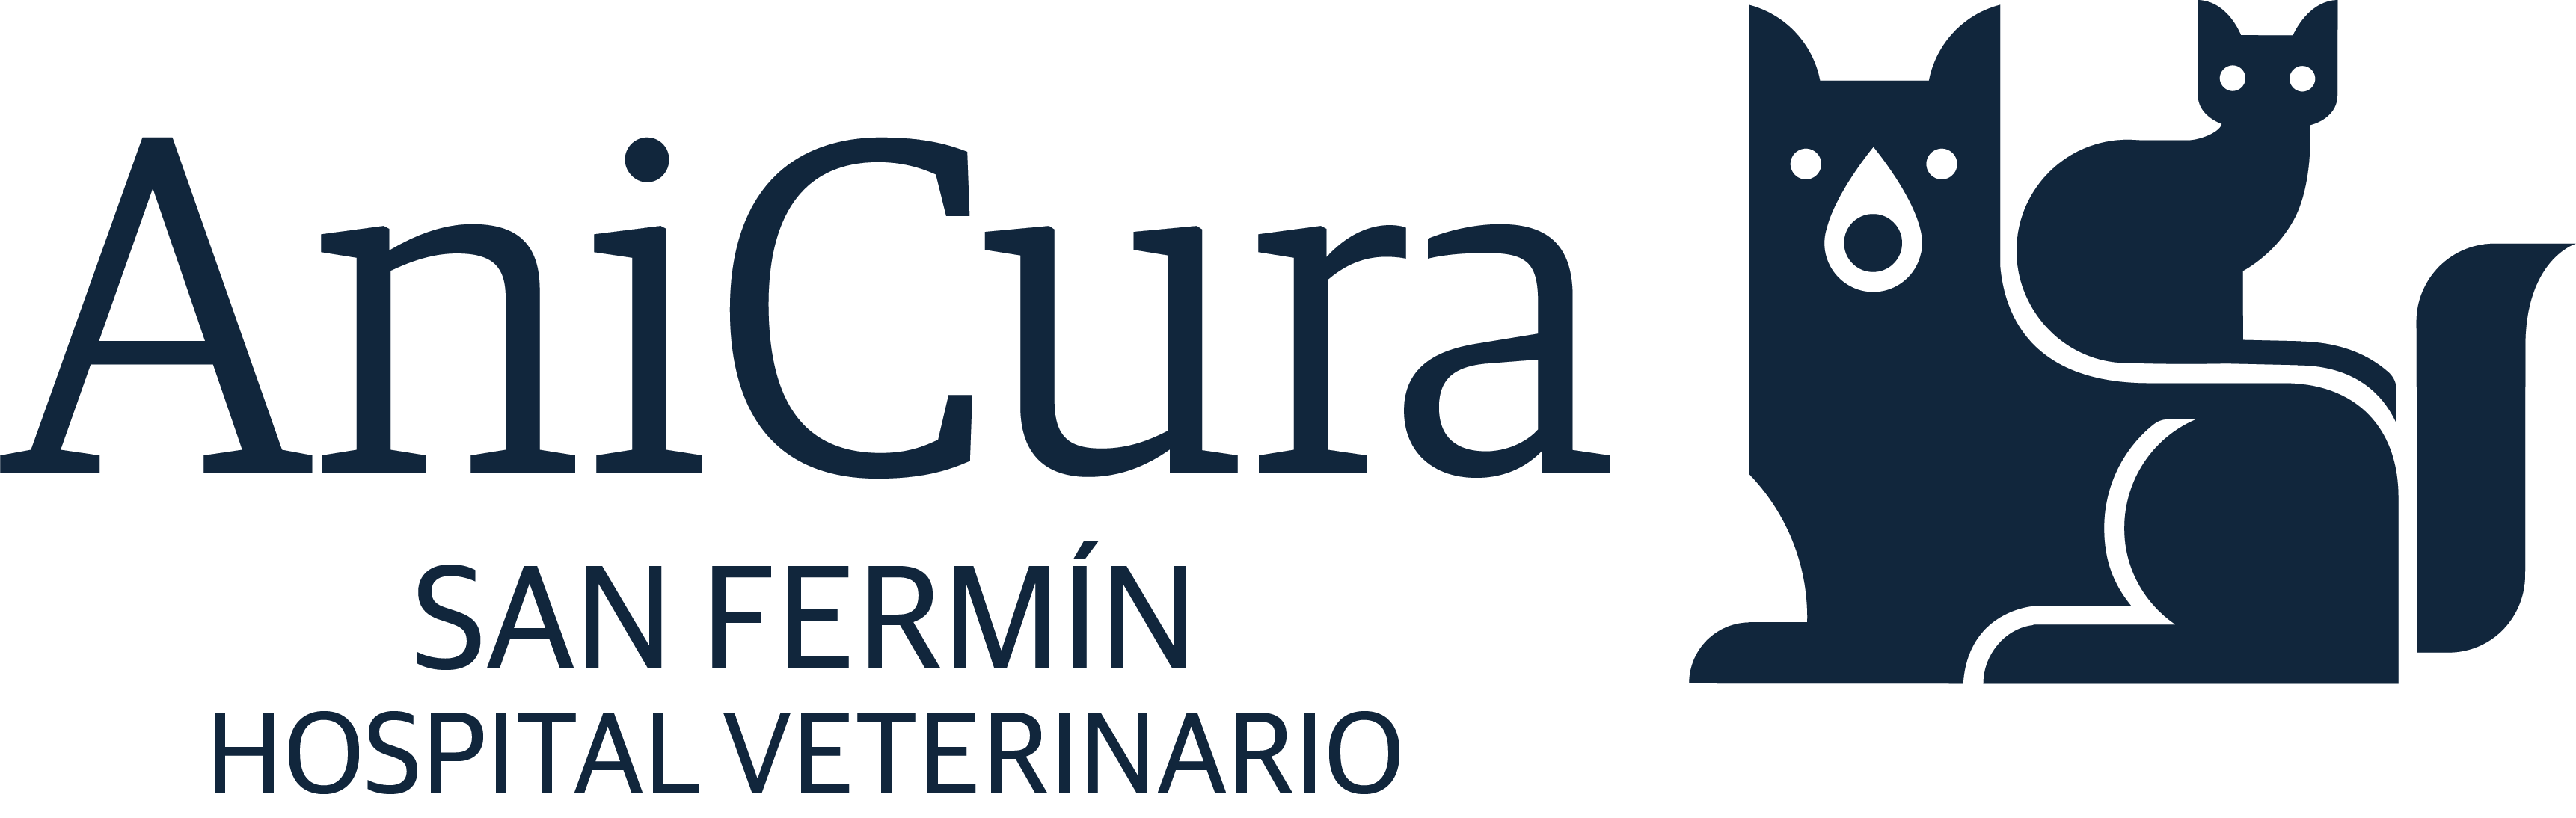 AniCura San Fermín Hospital Veterinario logo